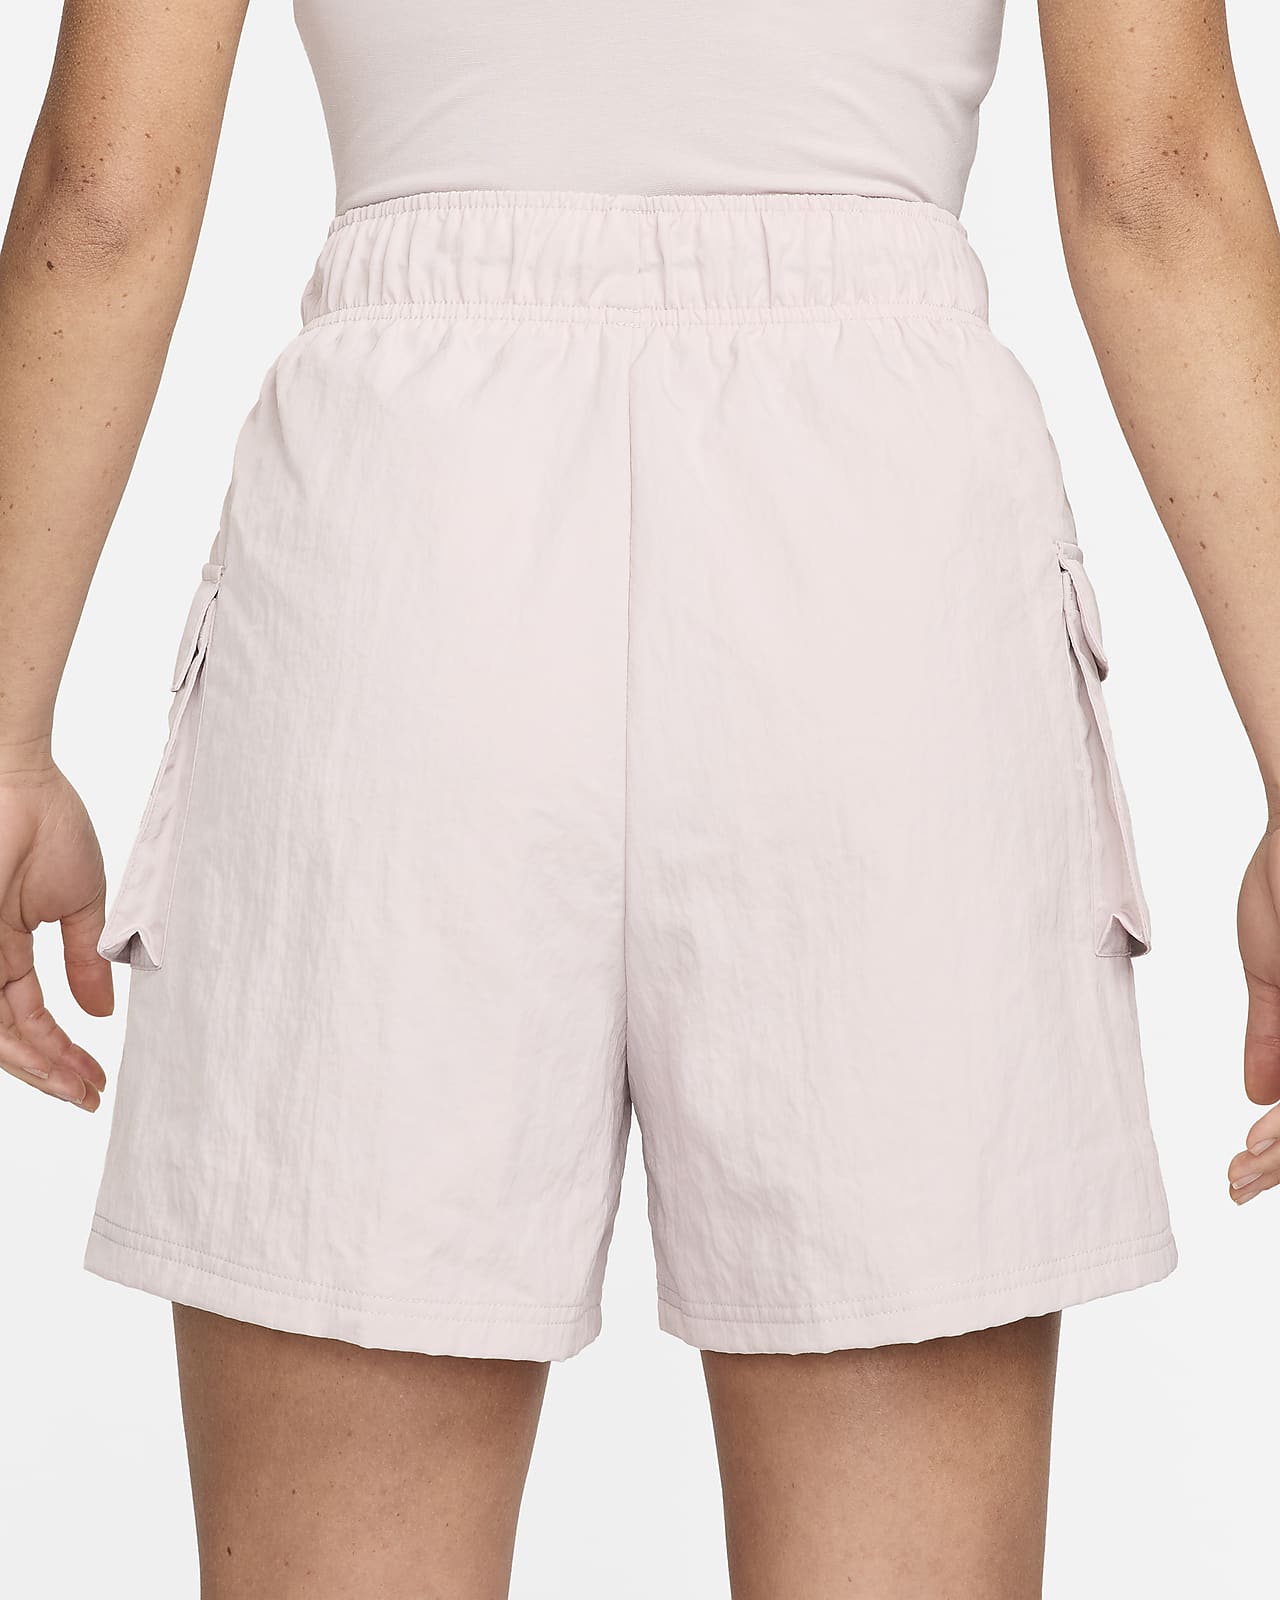 Pantalones cargo tejido de tiro alto para mujer Nike Sportswear Essential